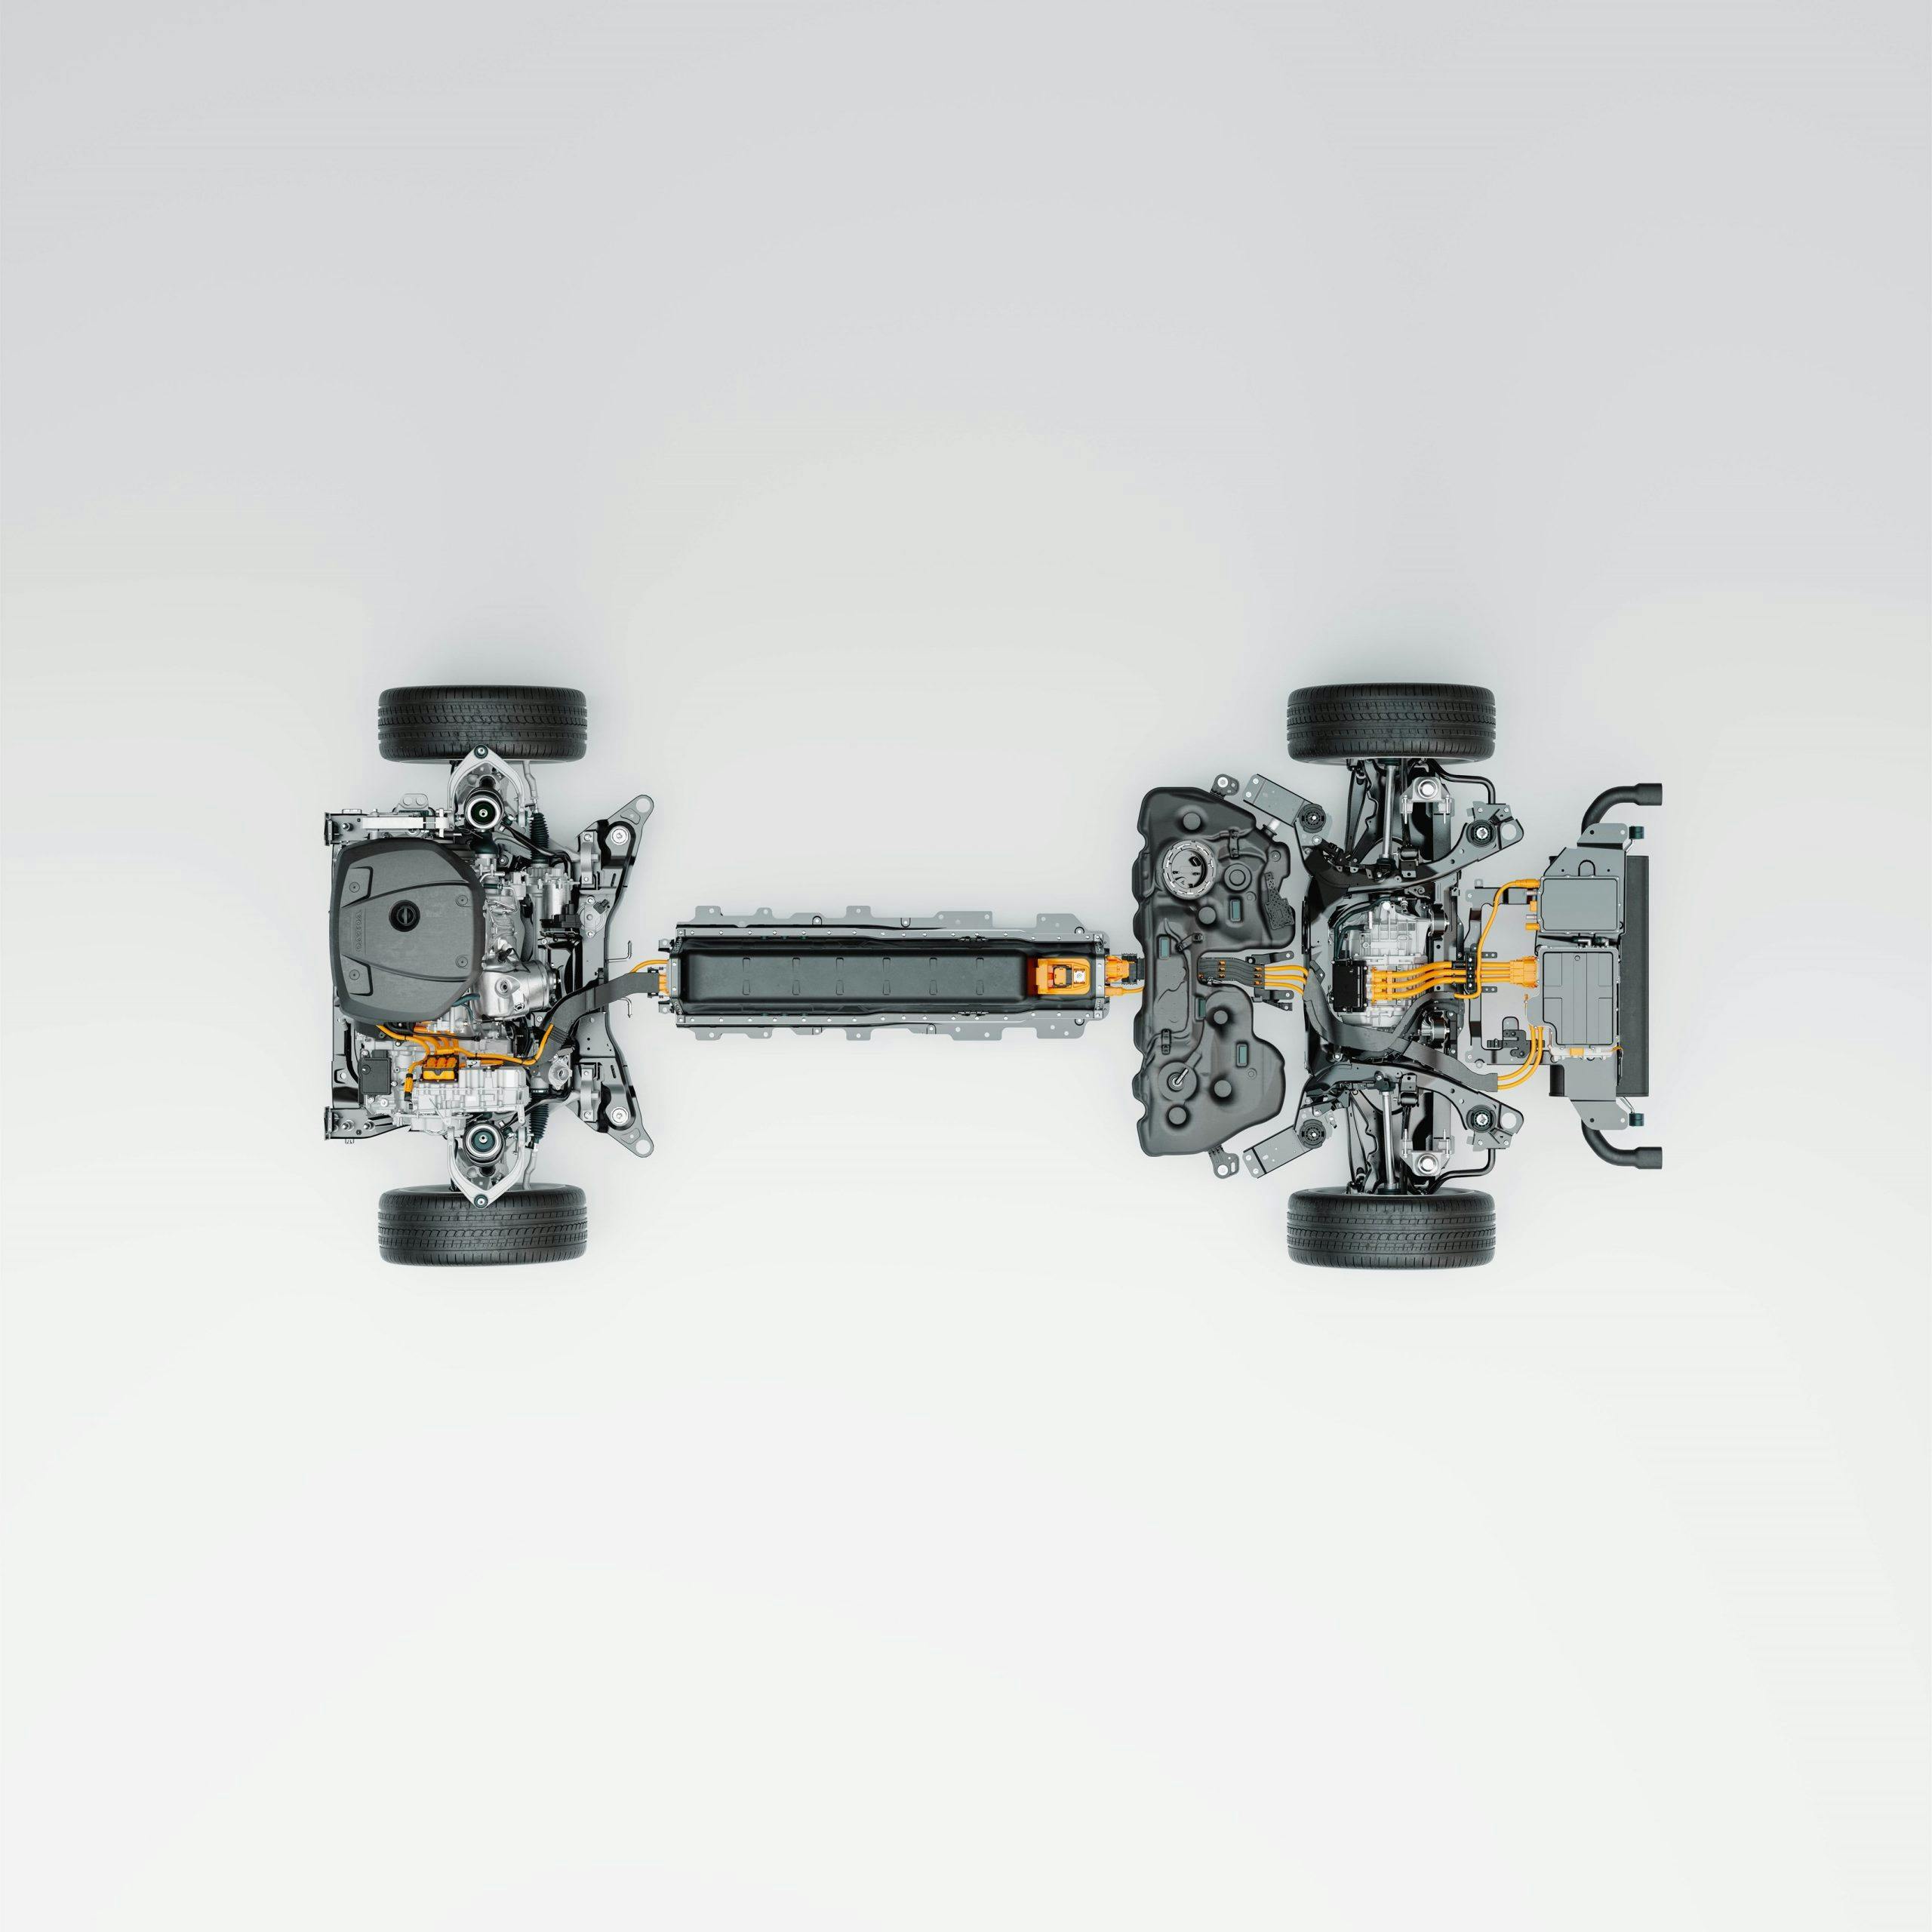 Volvo XC60 Recharge powertrain updates cutaways of powertrain/battery